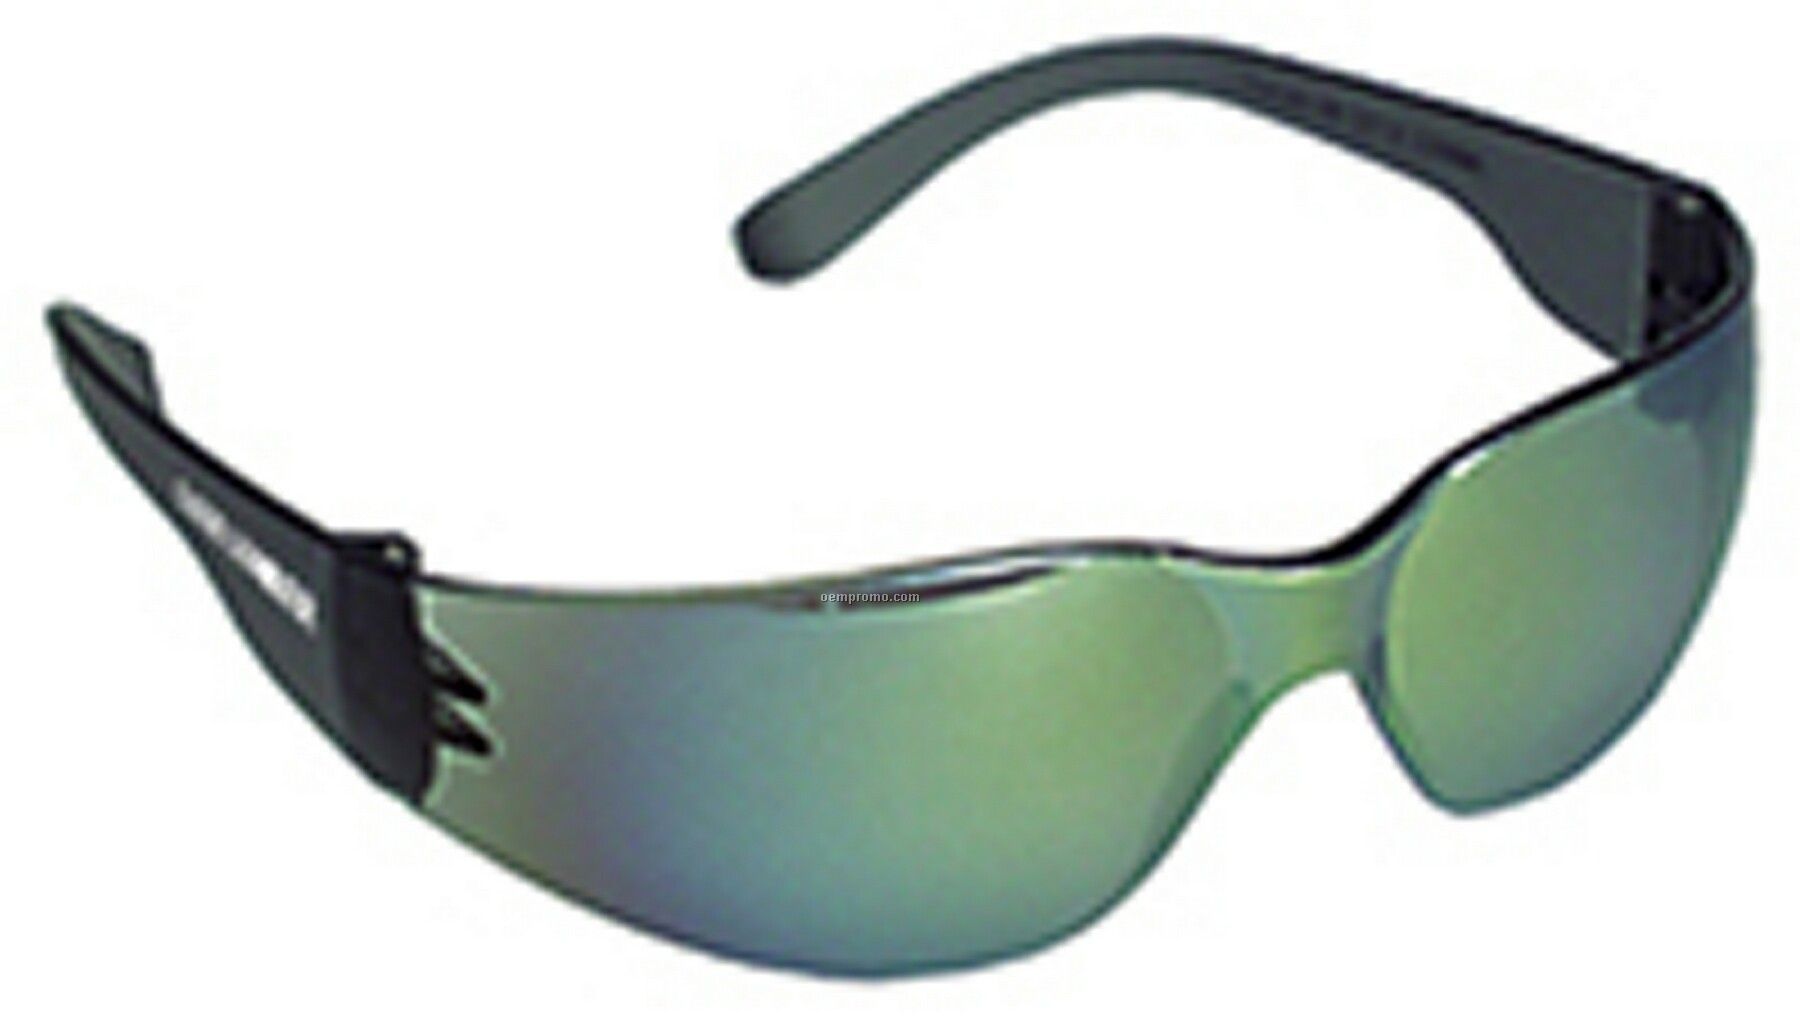 Starlite Safety Glasses W/ Mirrored Lenses.